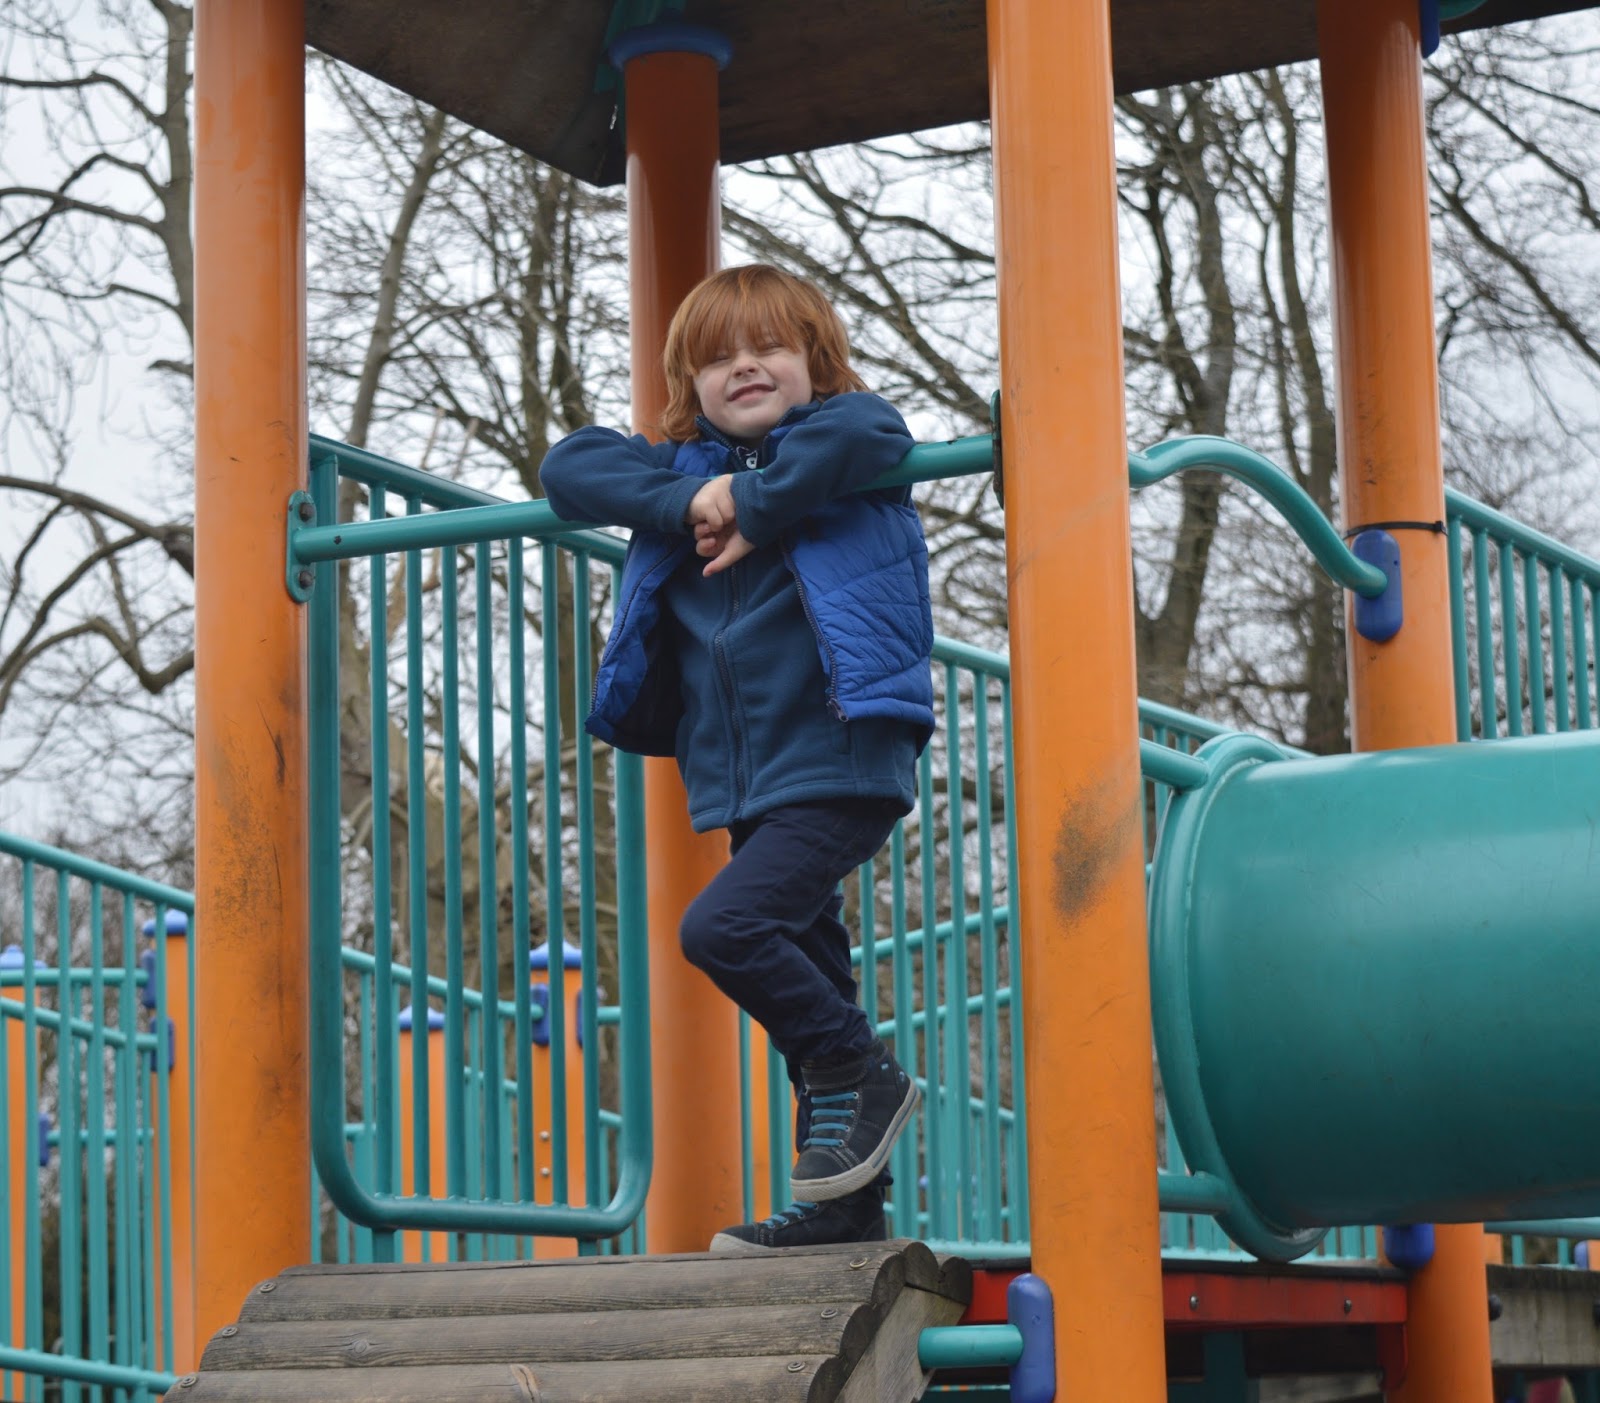 Saltwell Park younger children's Play Park